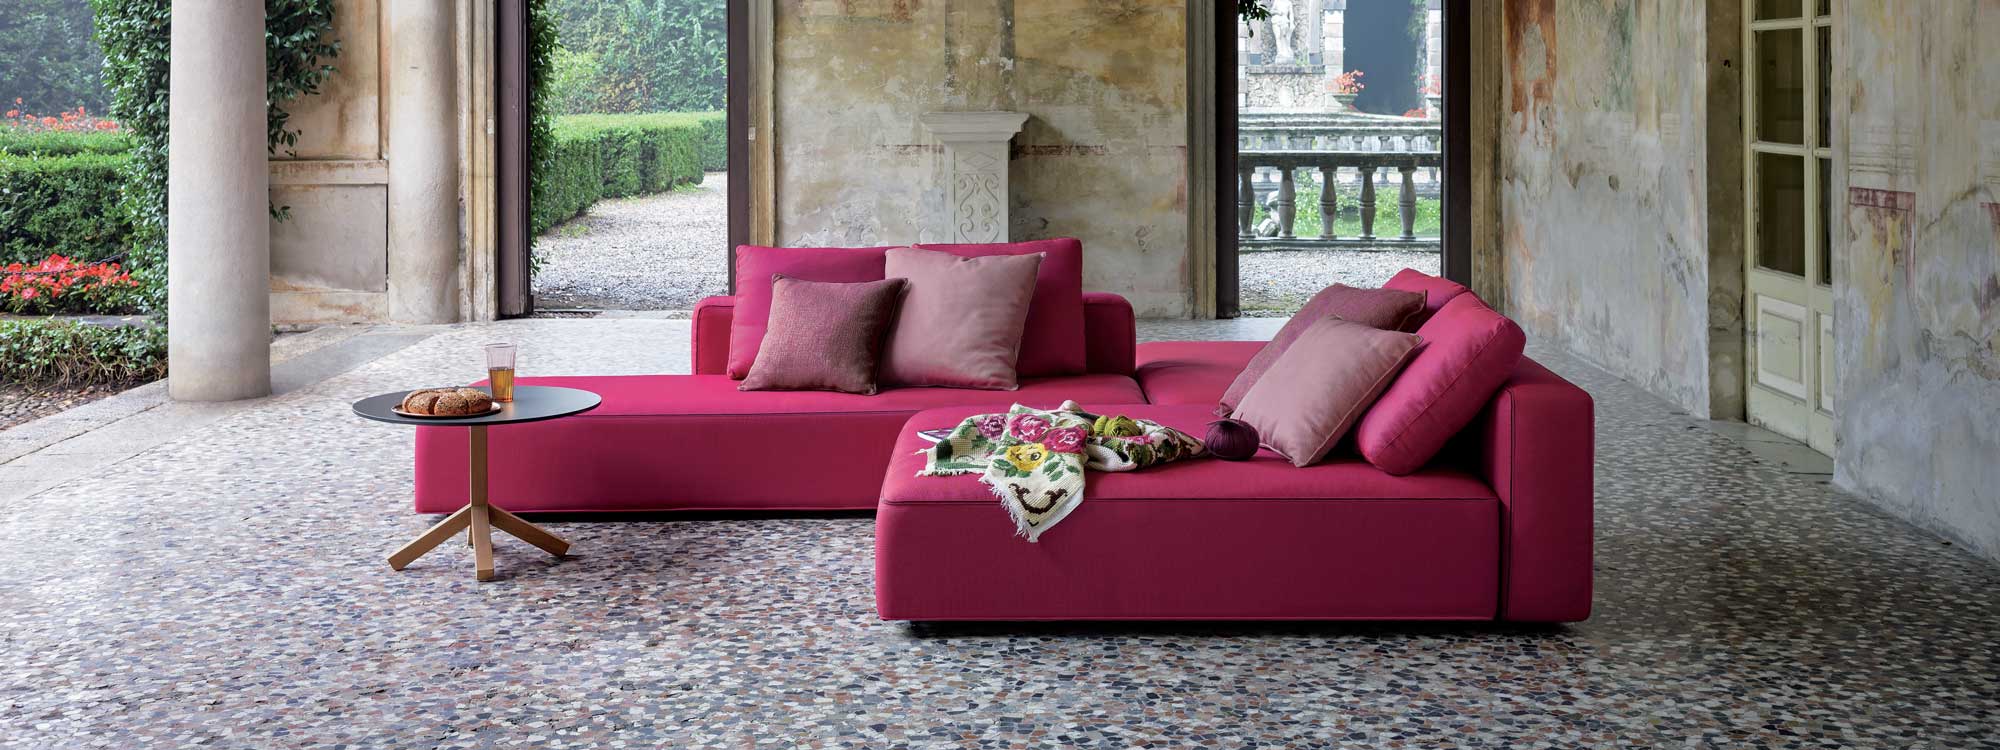 Dandy outdoor sofa shown on an outdoor terrace